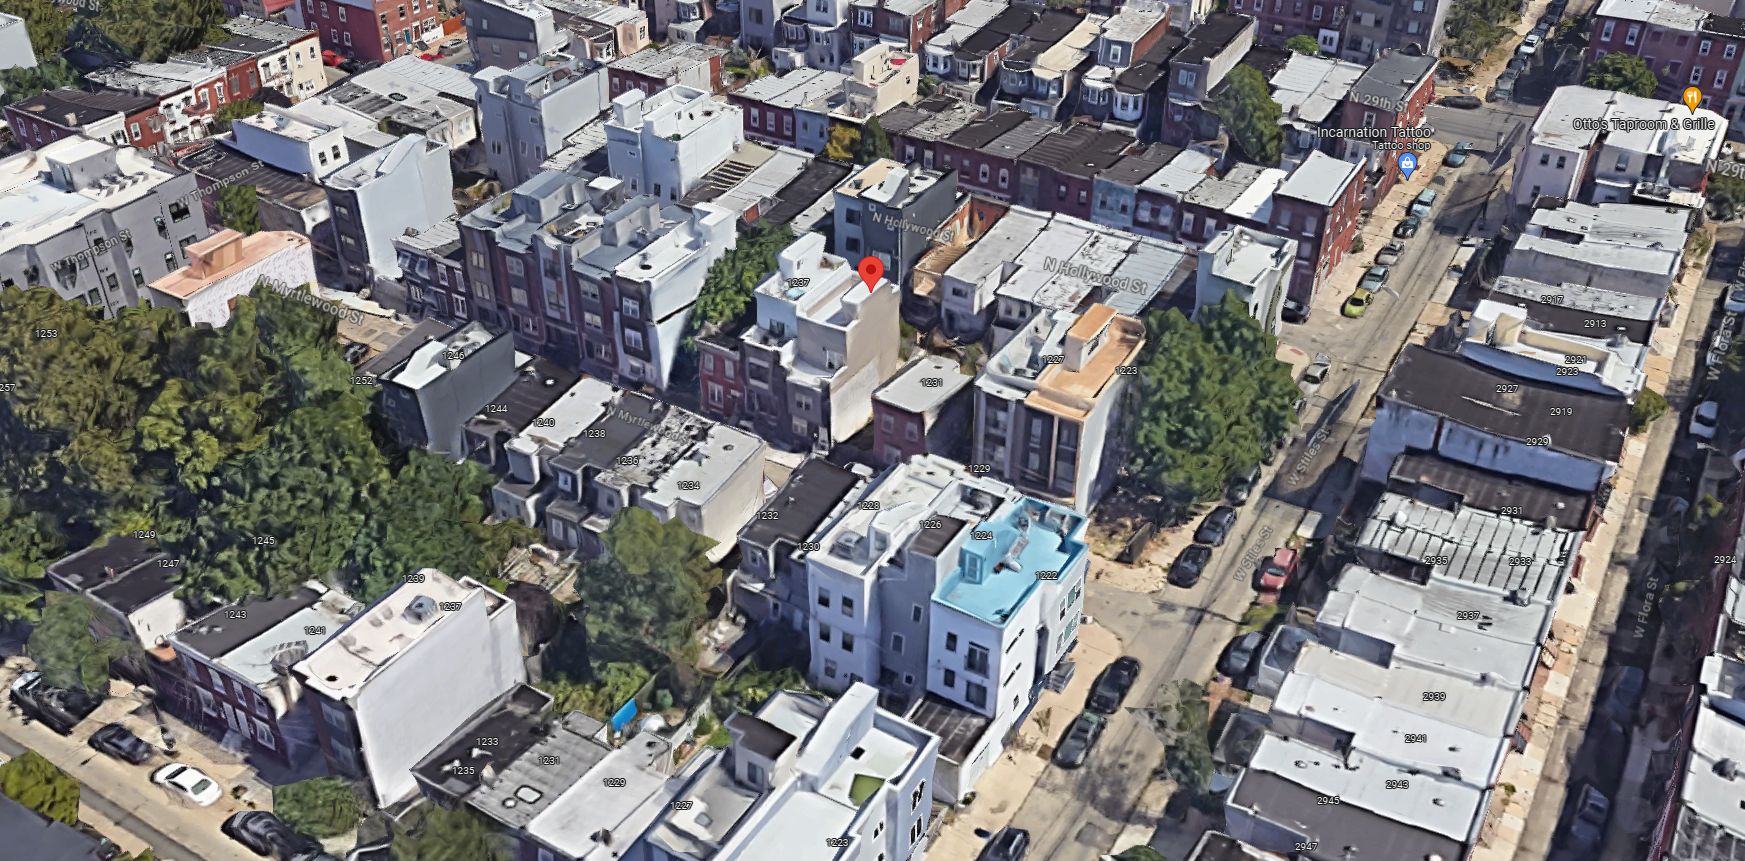 1233 North Myrtlewood Street. Aerial view prior to redevelopment. Looking northeast. Credit: Google Maps